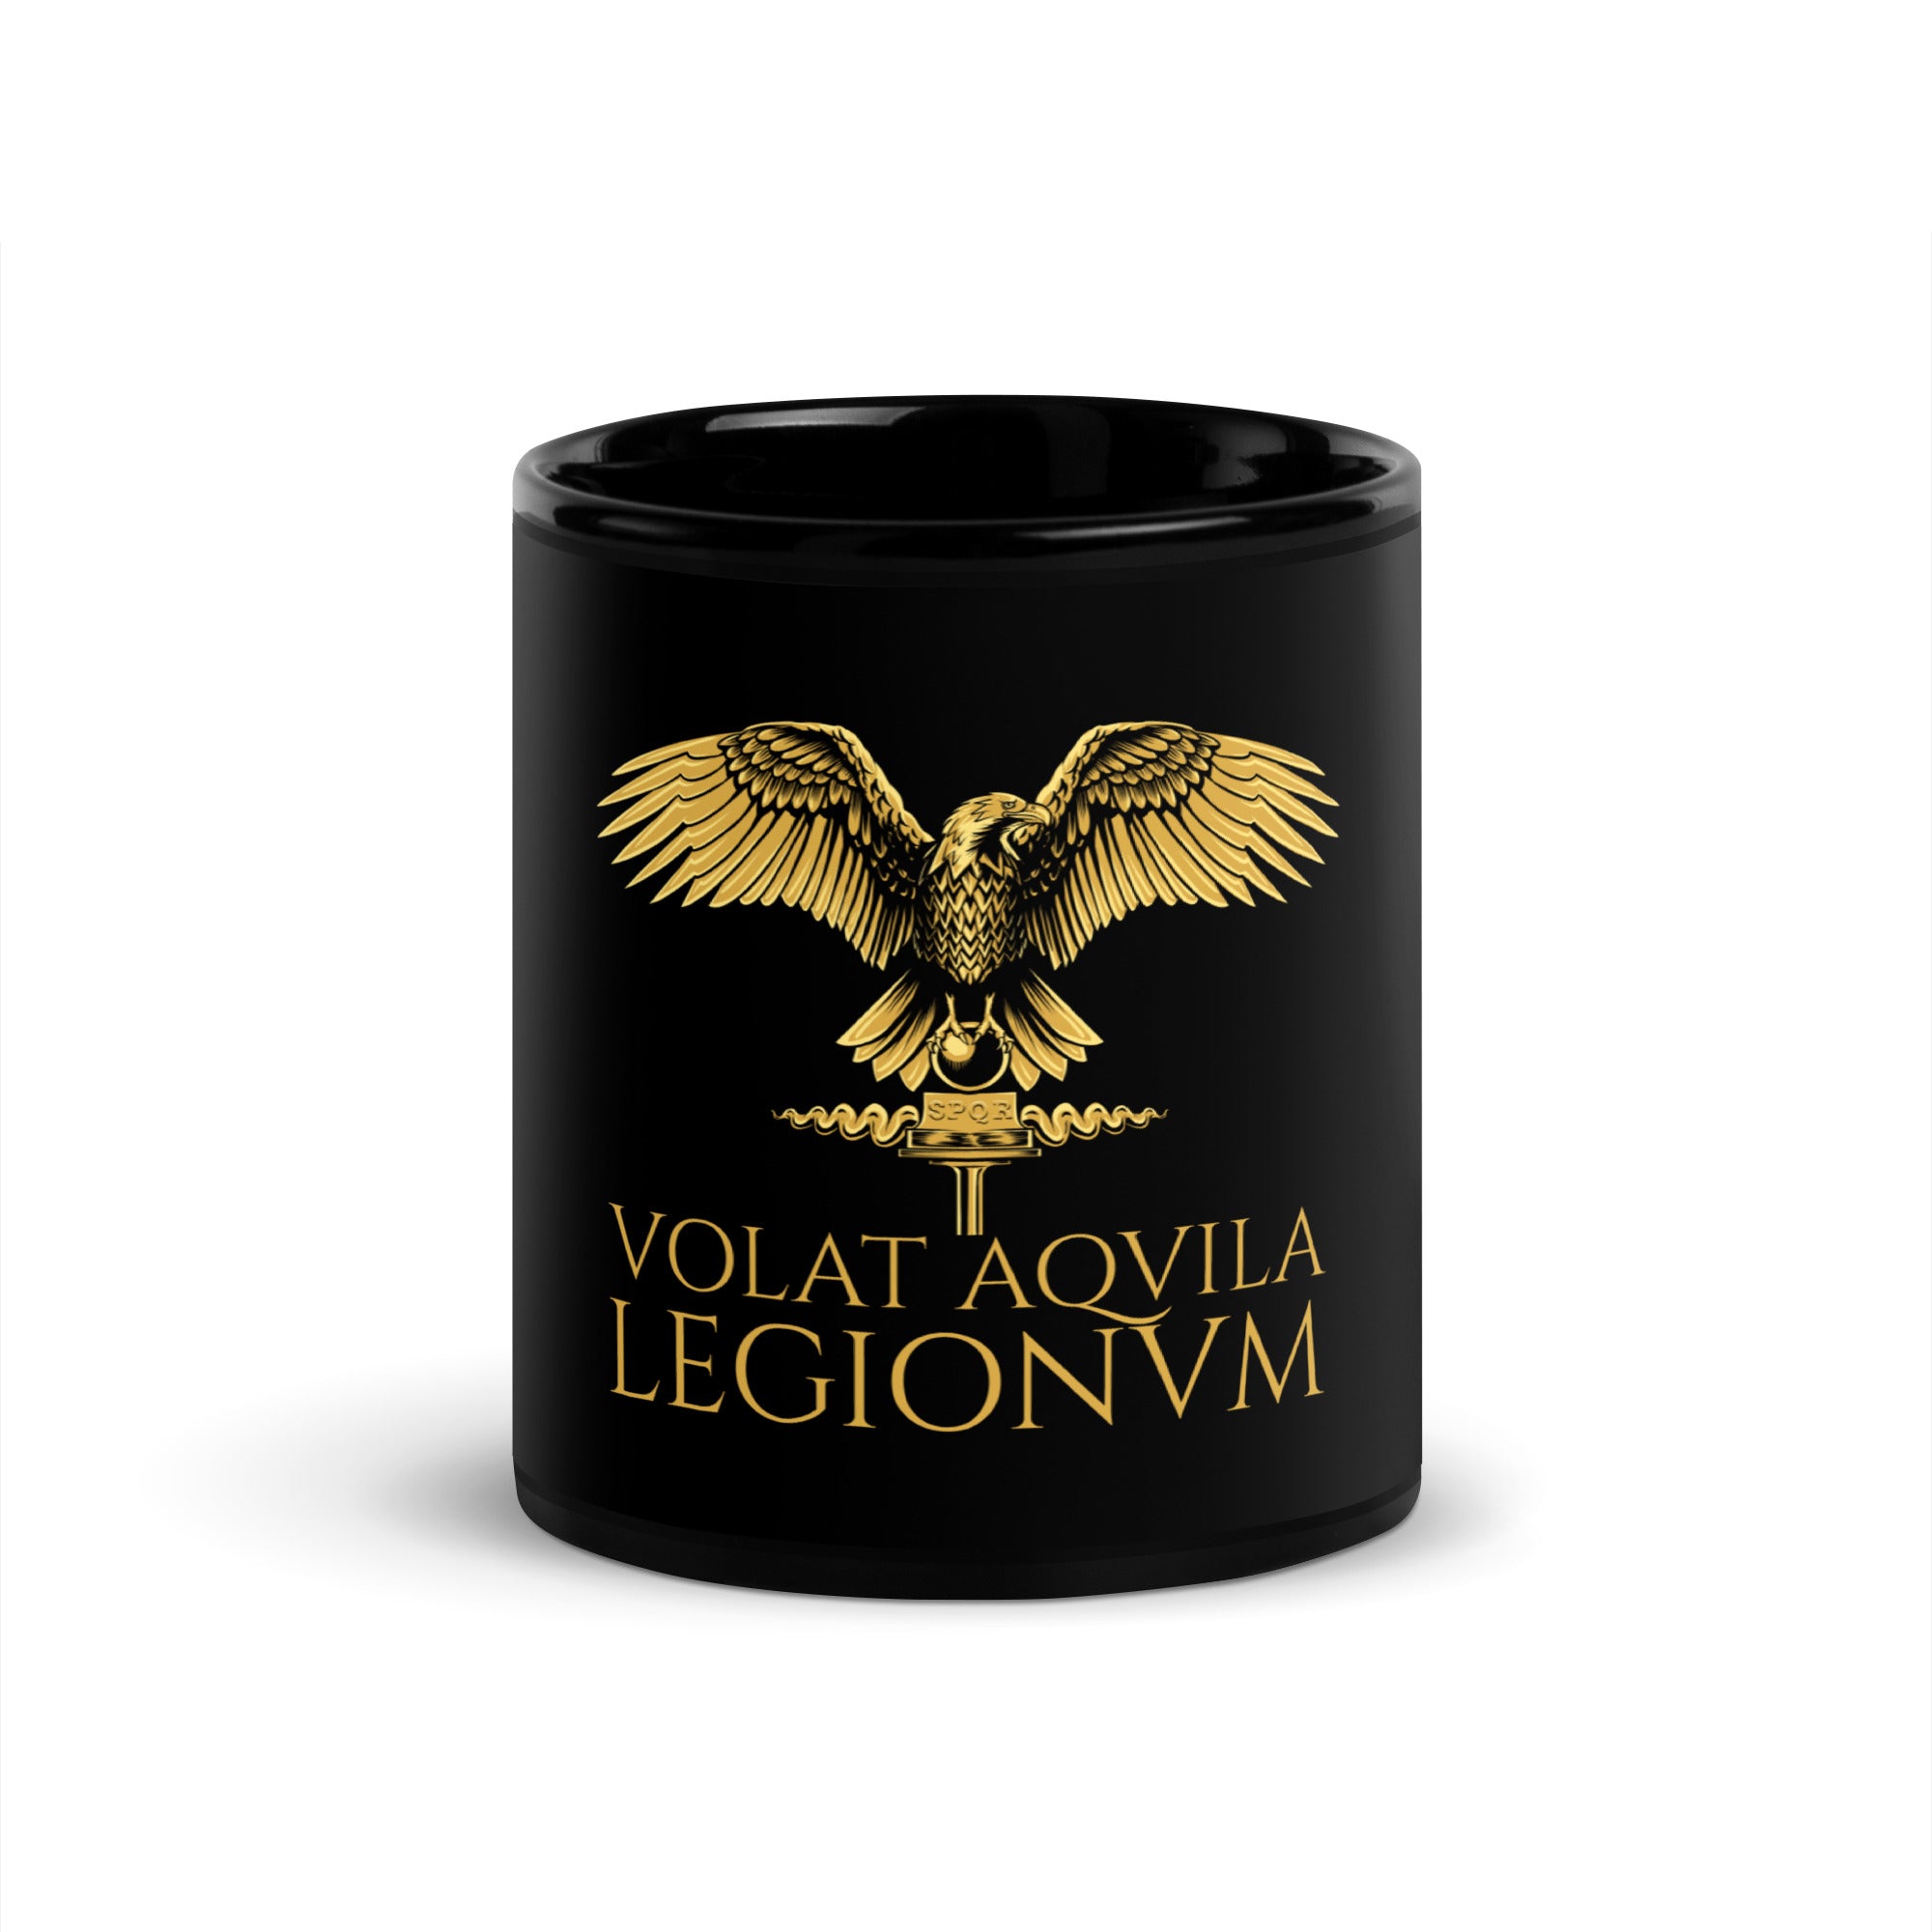 Volat Aquila Legionum - Classical Latin - Ancient Roman Legionary Eagle Black Glossy Mug